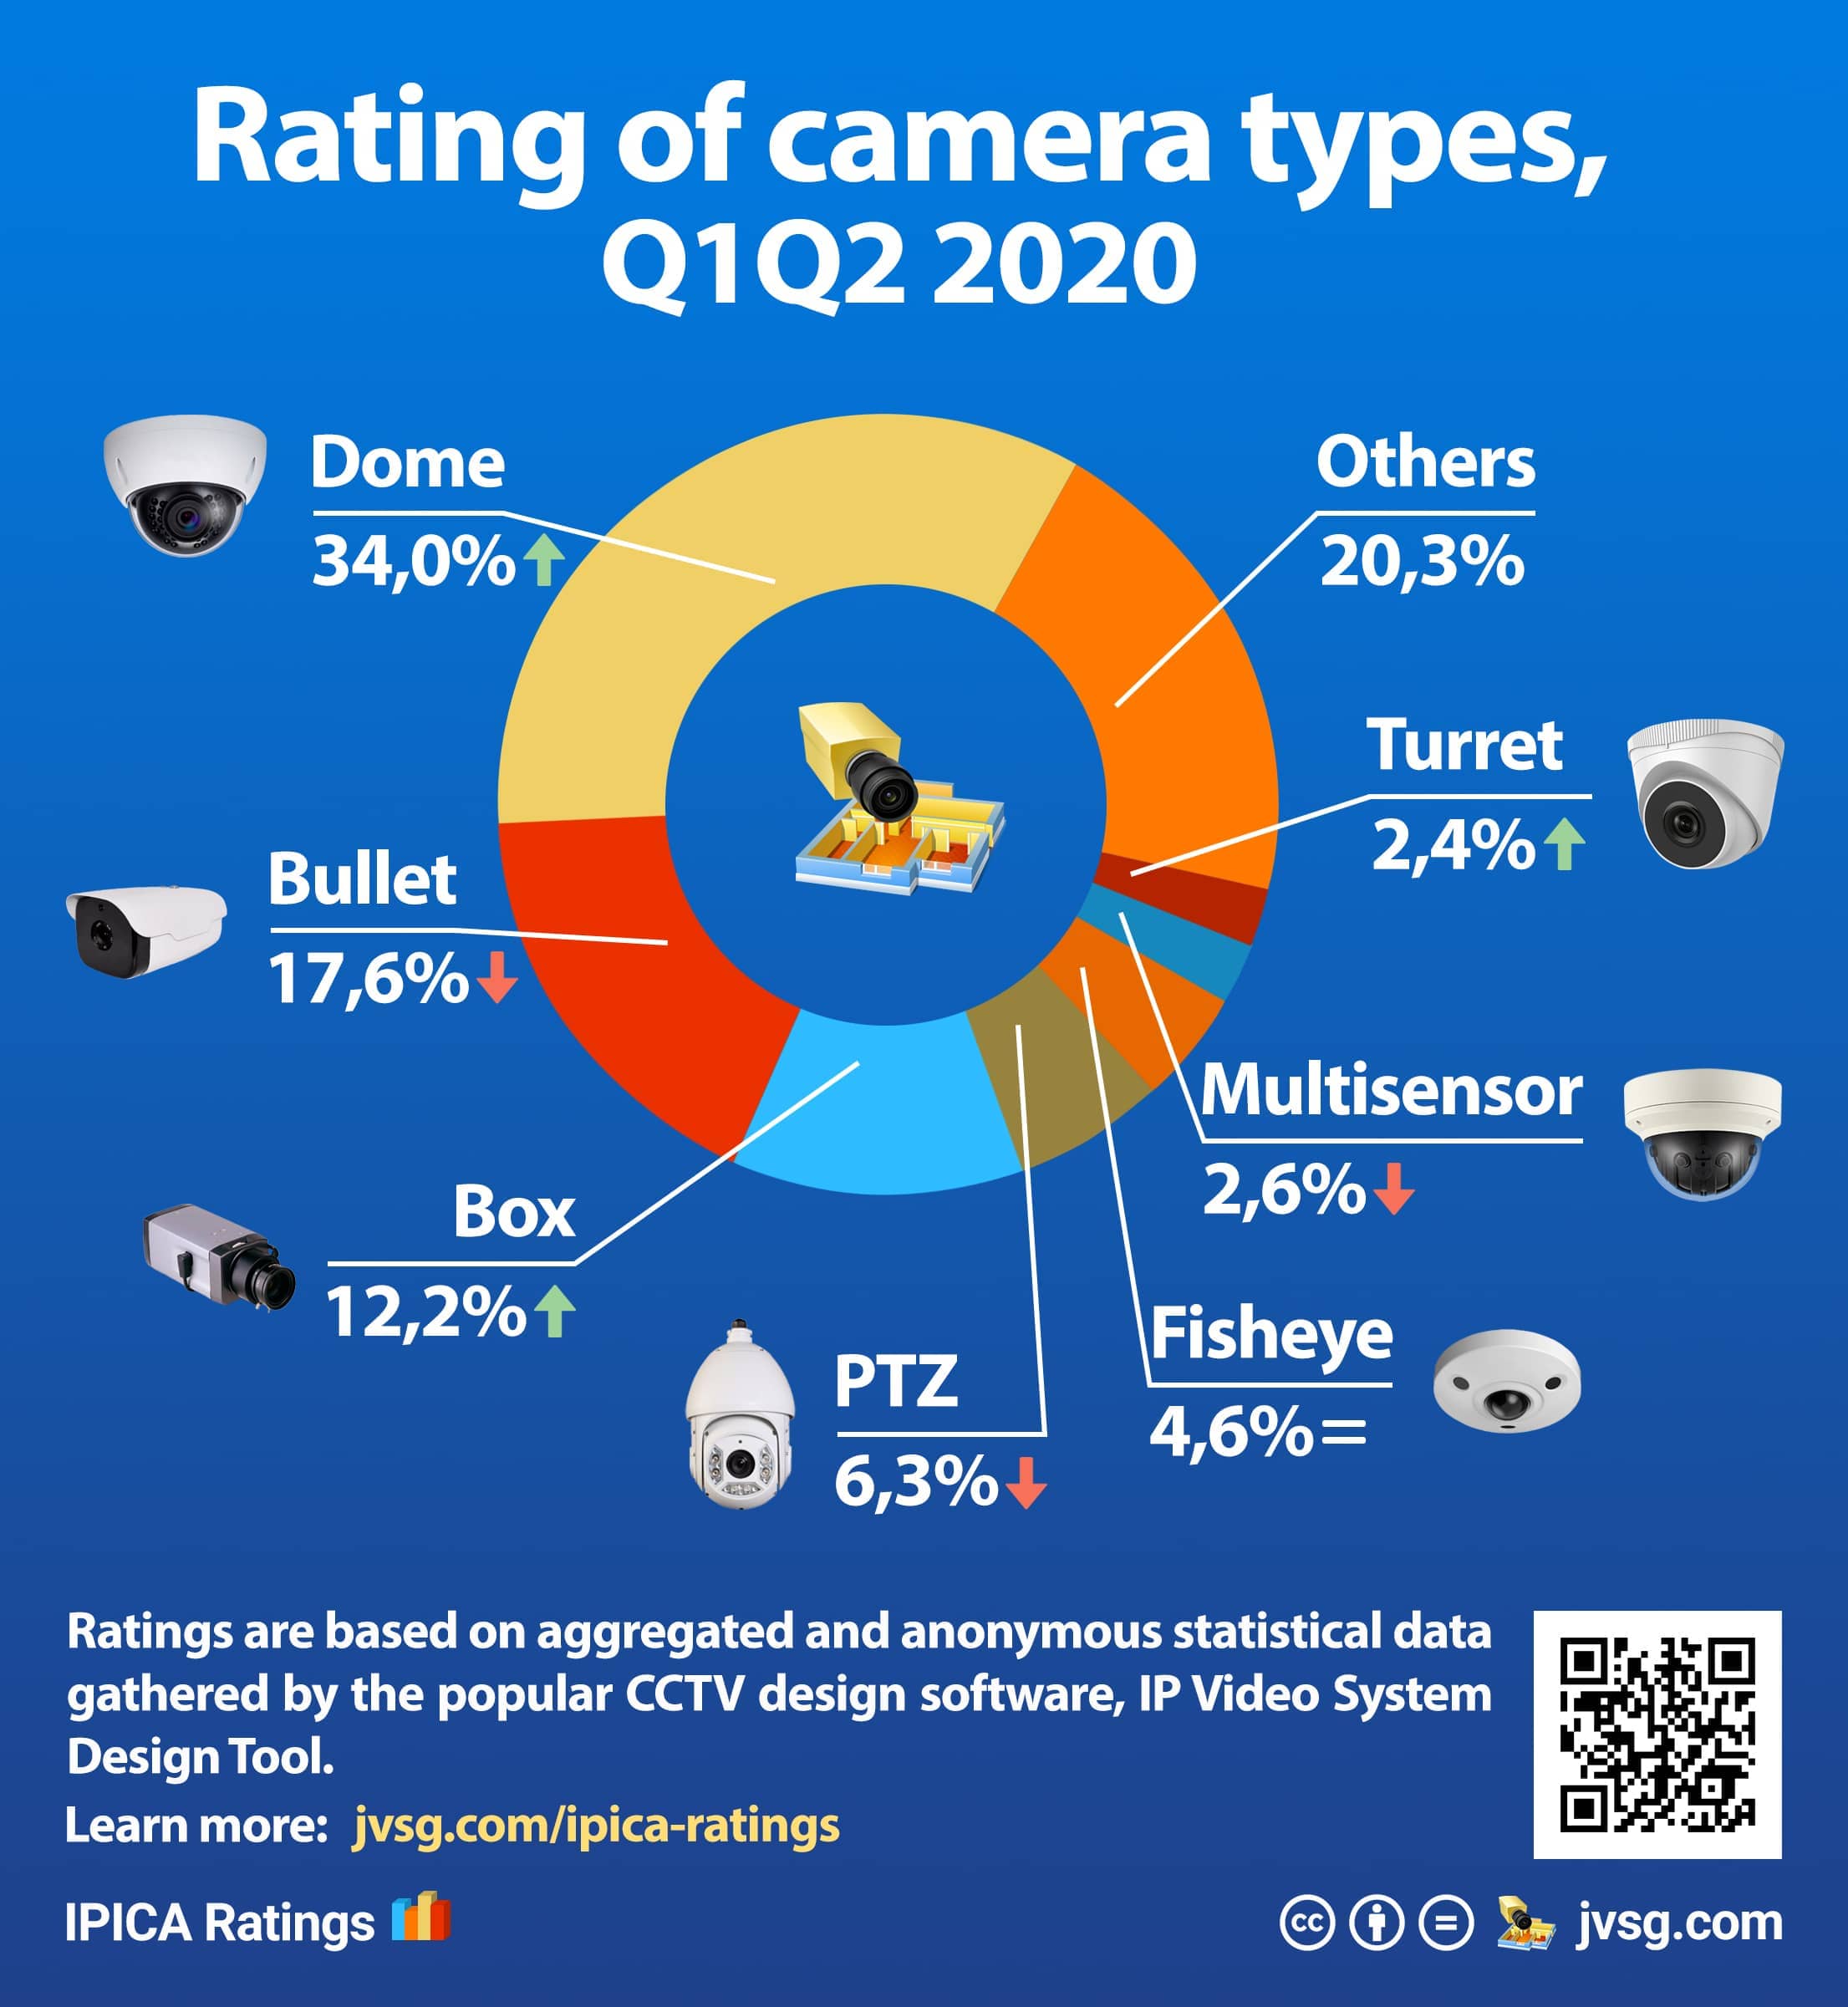 best quality surveillance cameras